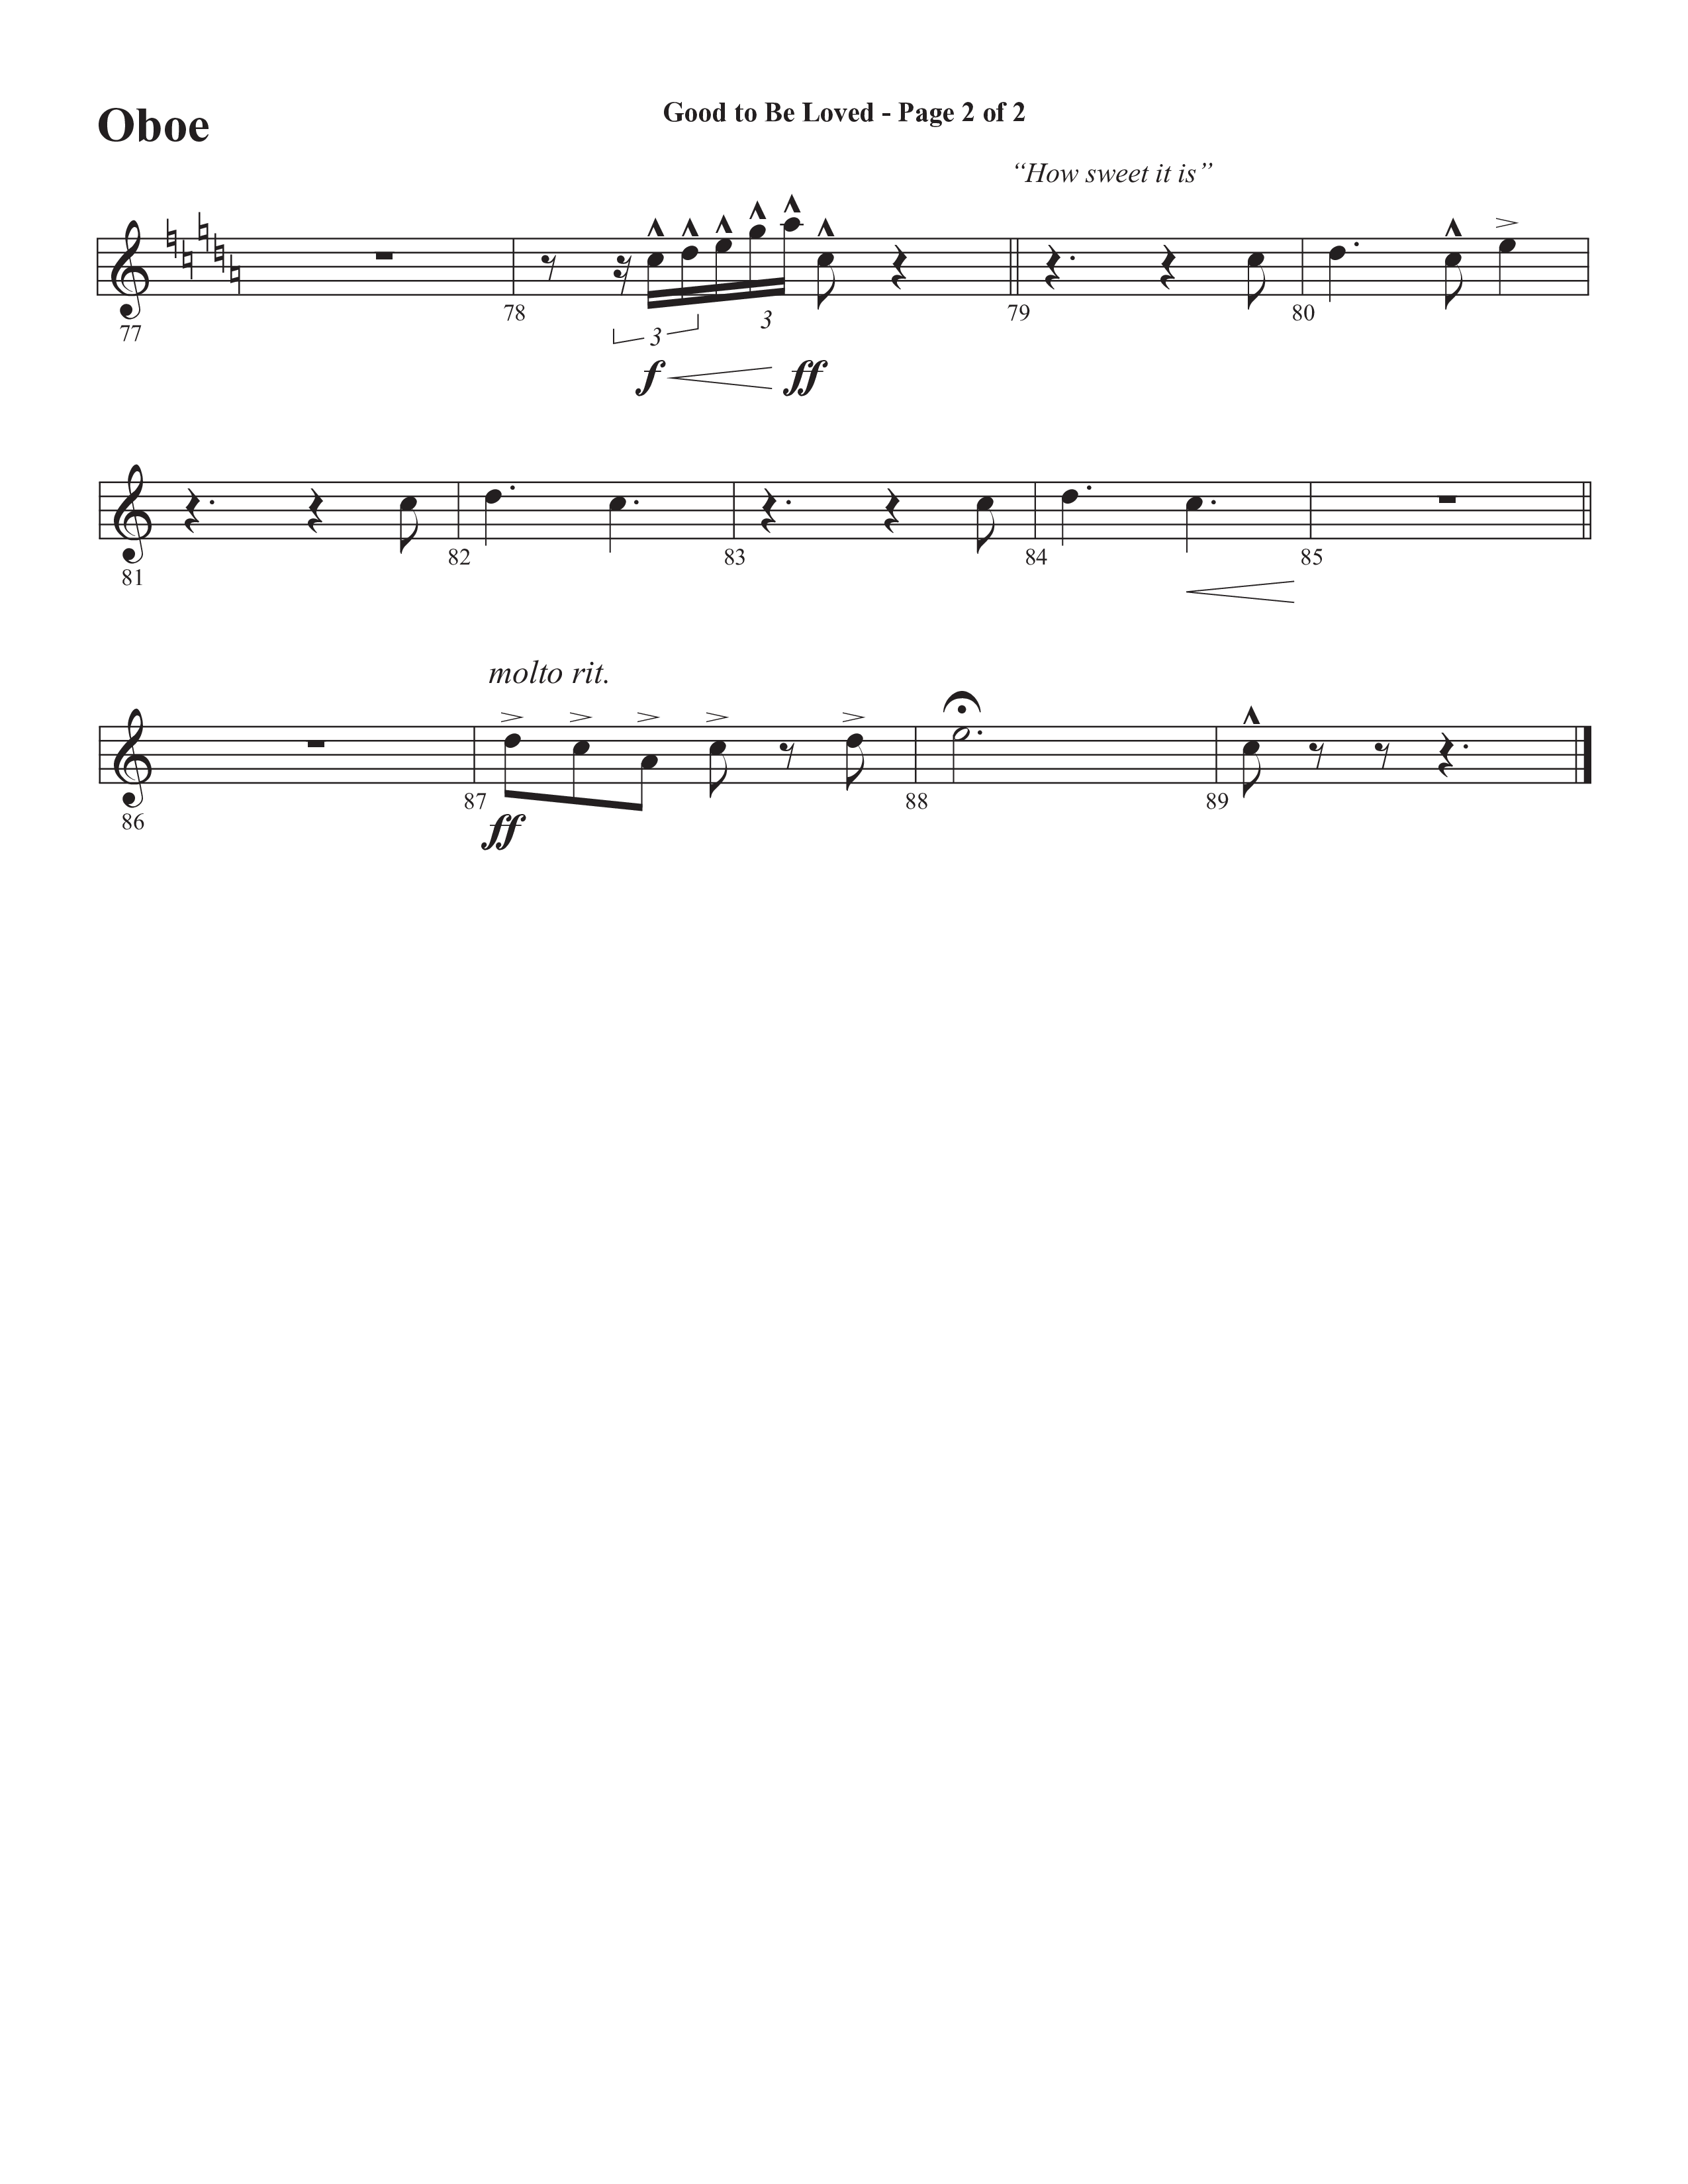 Good To Be Loved (Choral Anthem SATB) Oboe (Semsen Music / Arr. Cliff Duren)